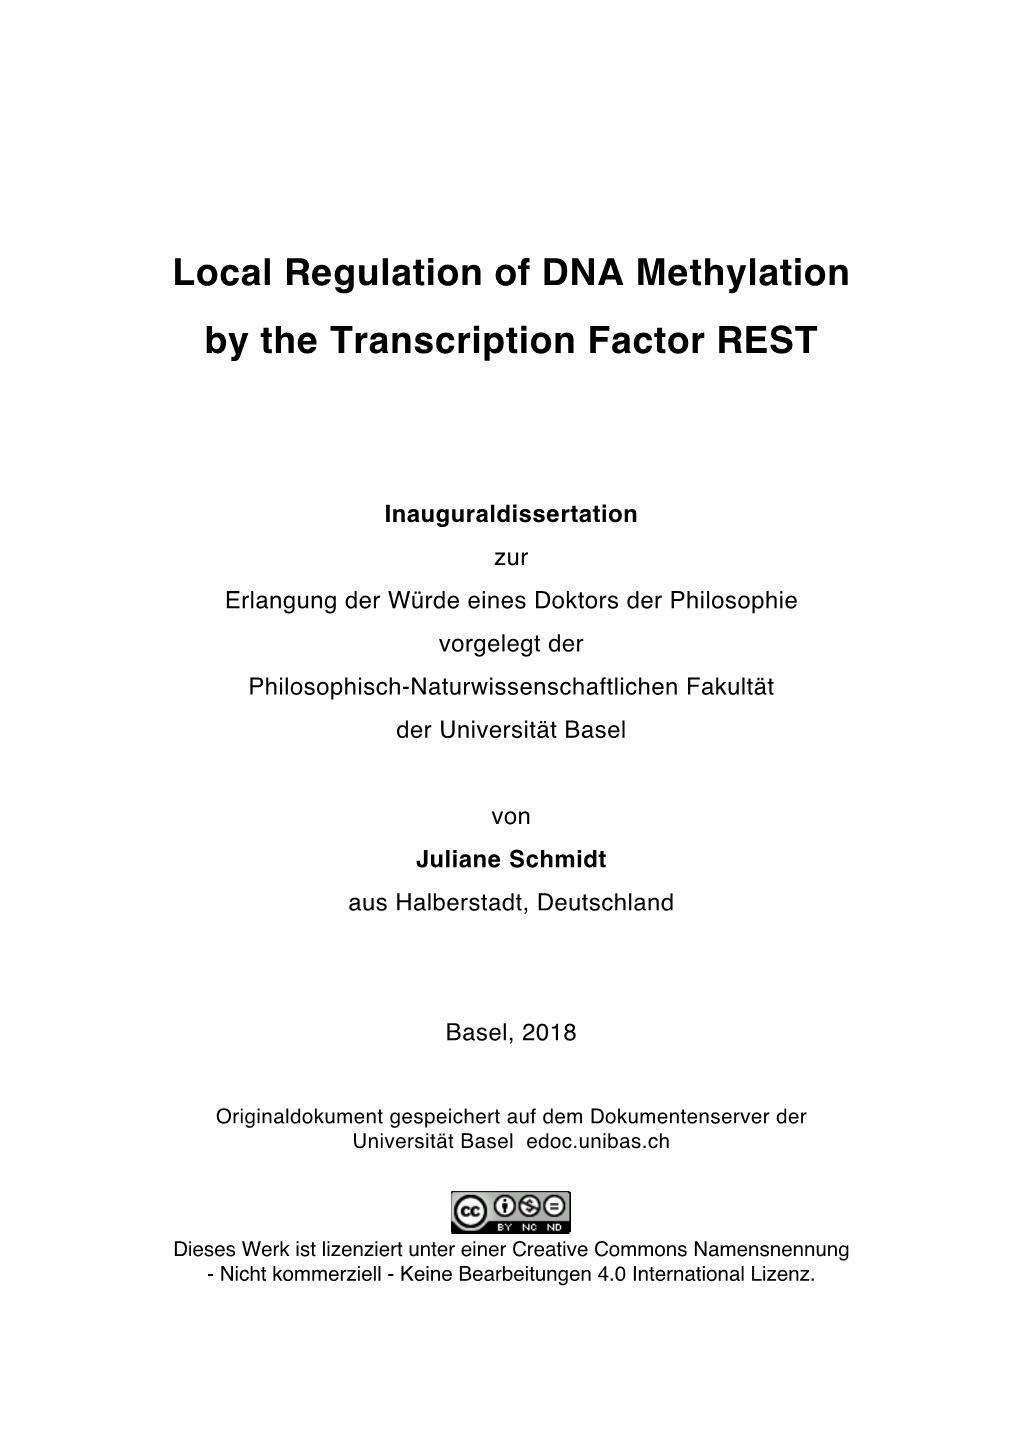 Local Regulation of DNA Methylation by the Transcription Factor REST